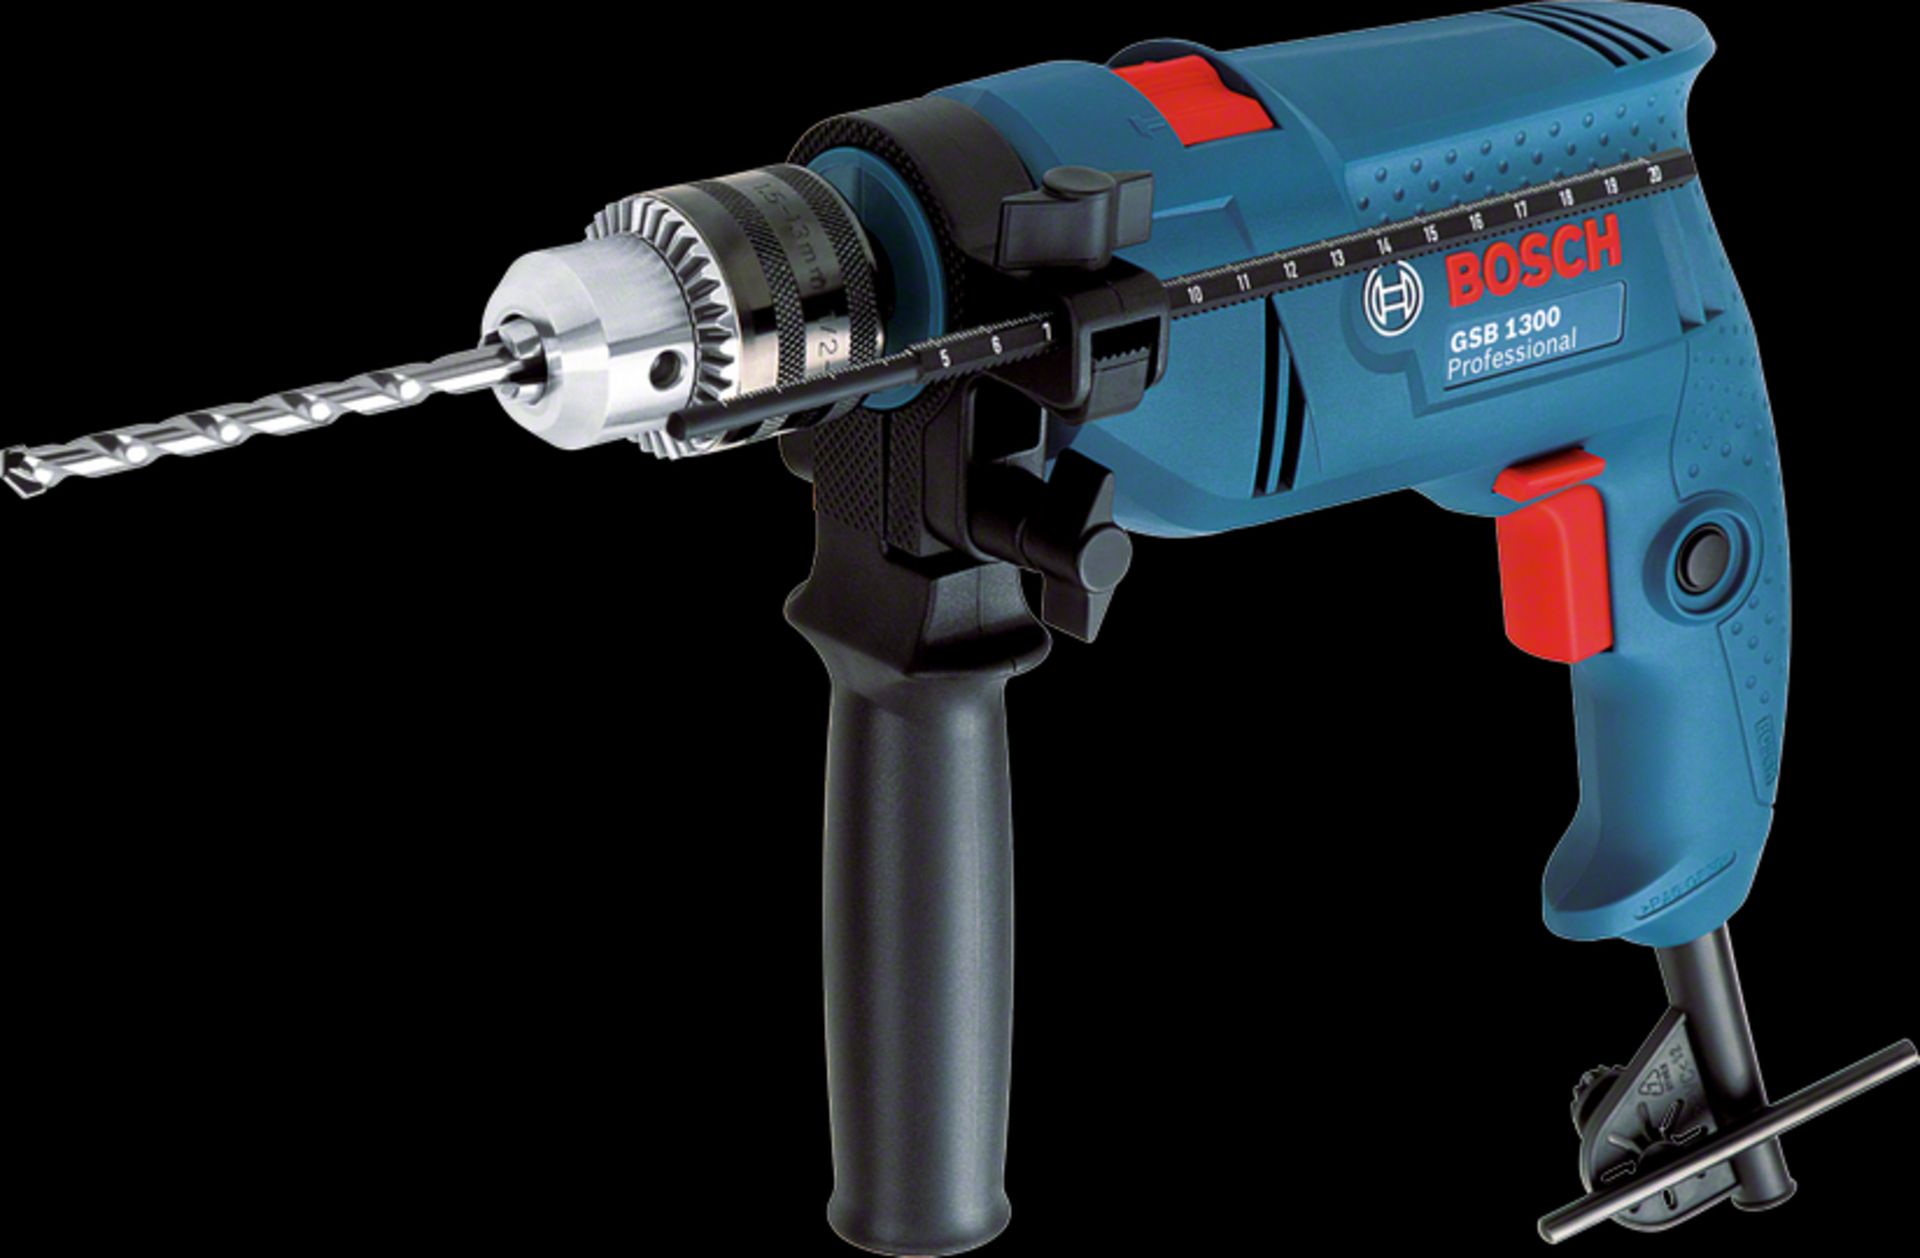 V Brand New Bosch Professional 1300 Impact Drill (Similar) Amazon Price £63.00 (European Plug)